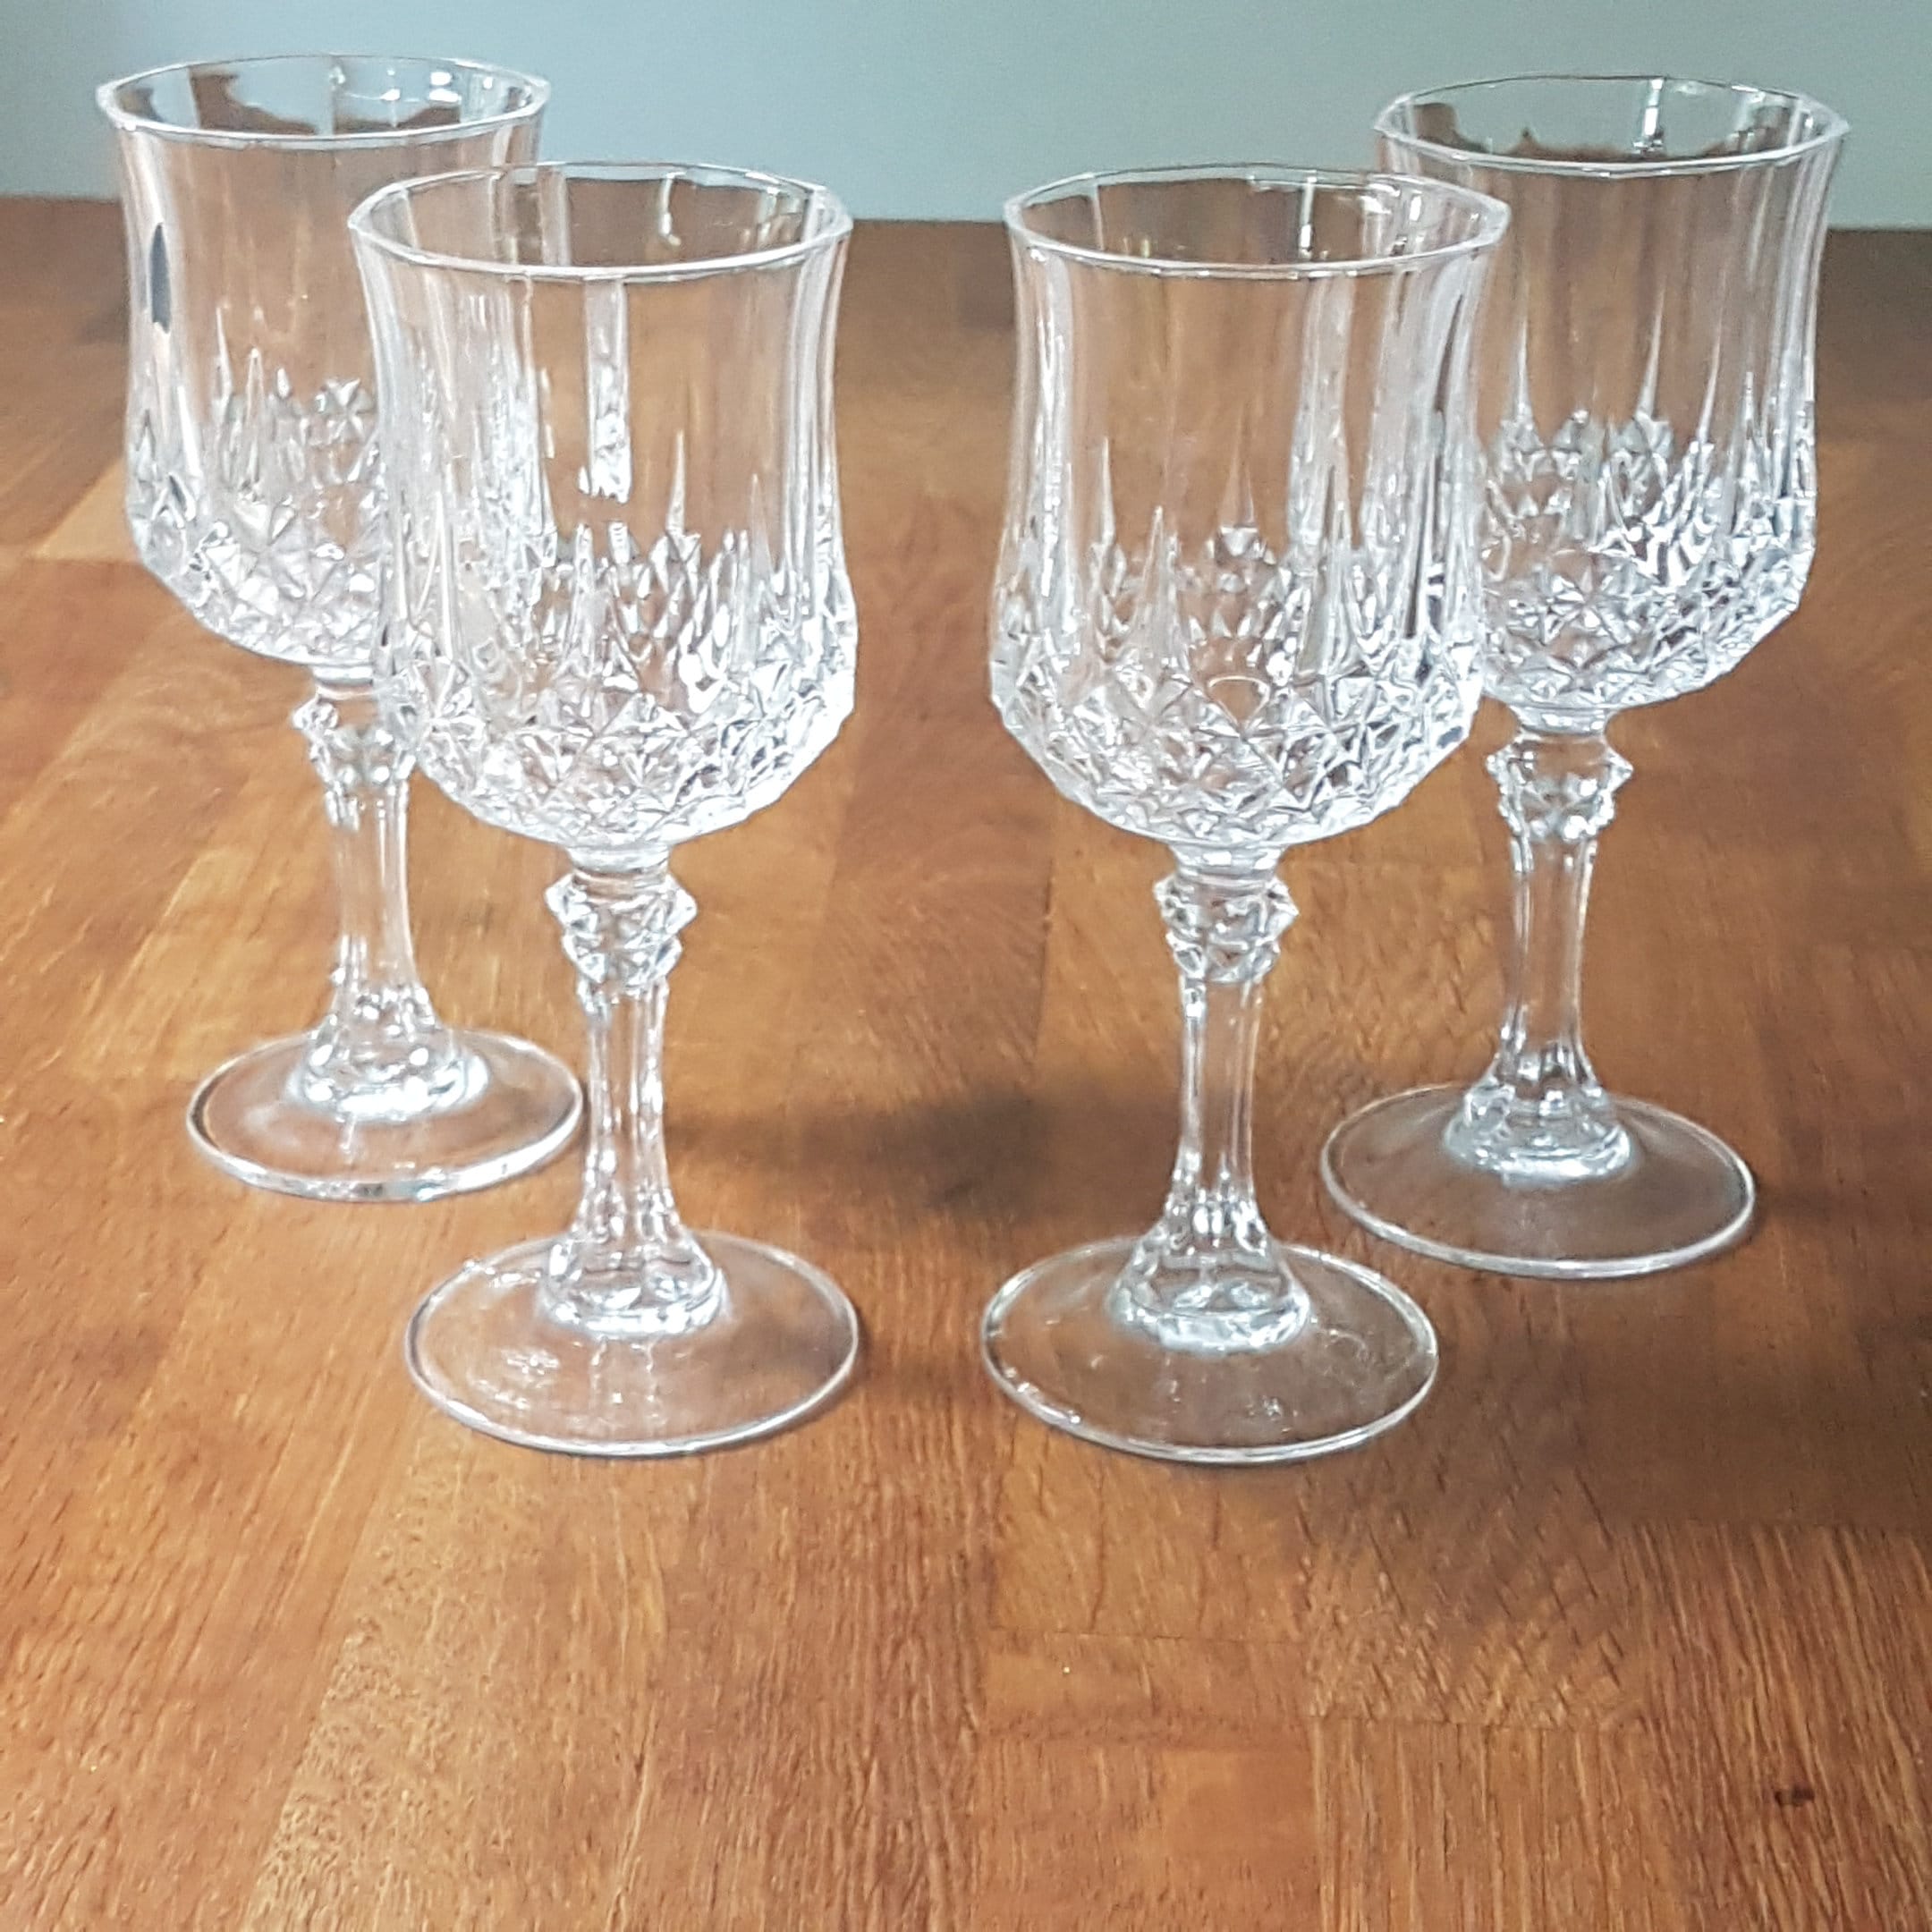 4 Vintage Cristal D Arques Durand 24 Lead Crystal Wine Glasses In Original Box